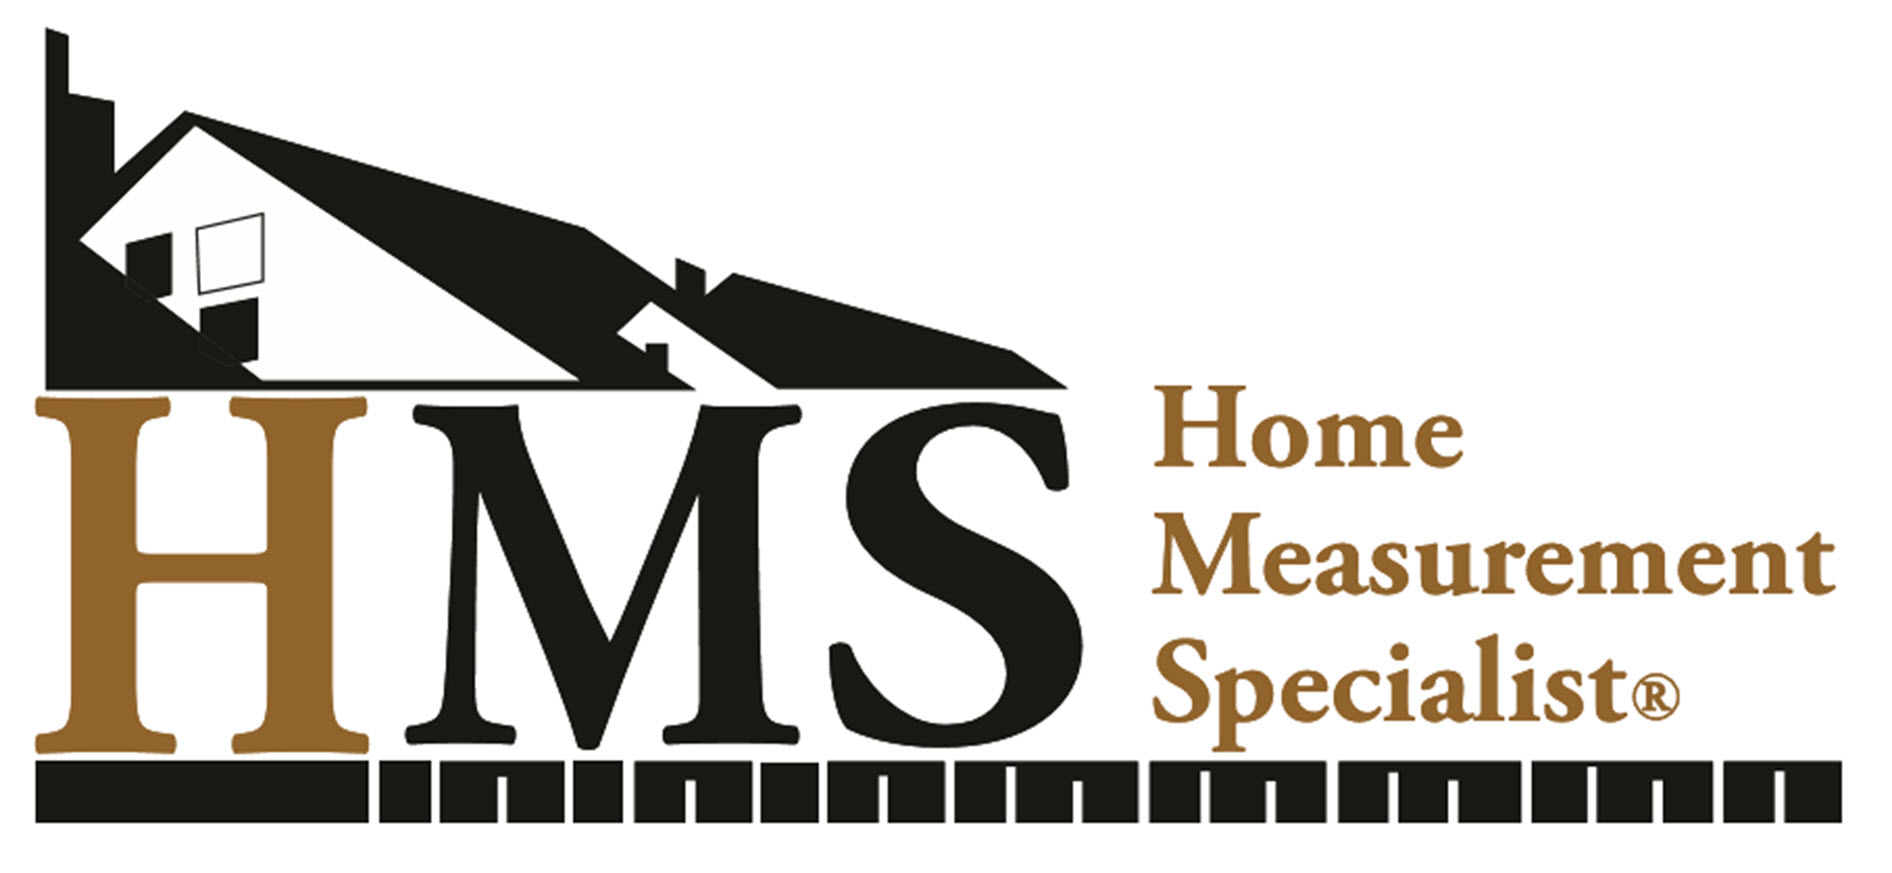 Home Measurement Specialist